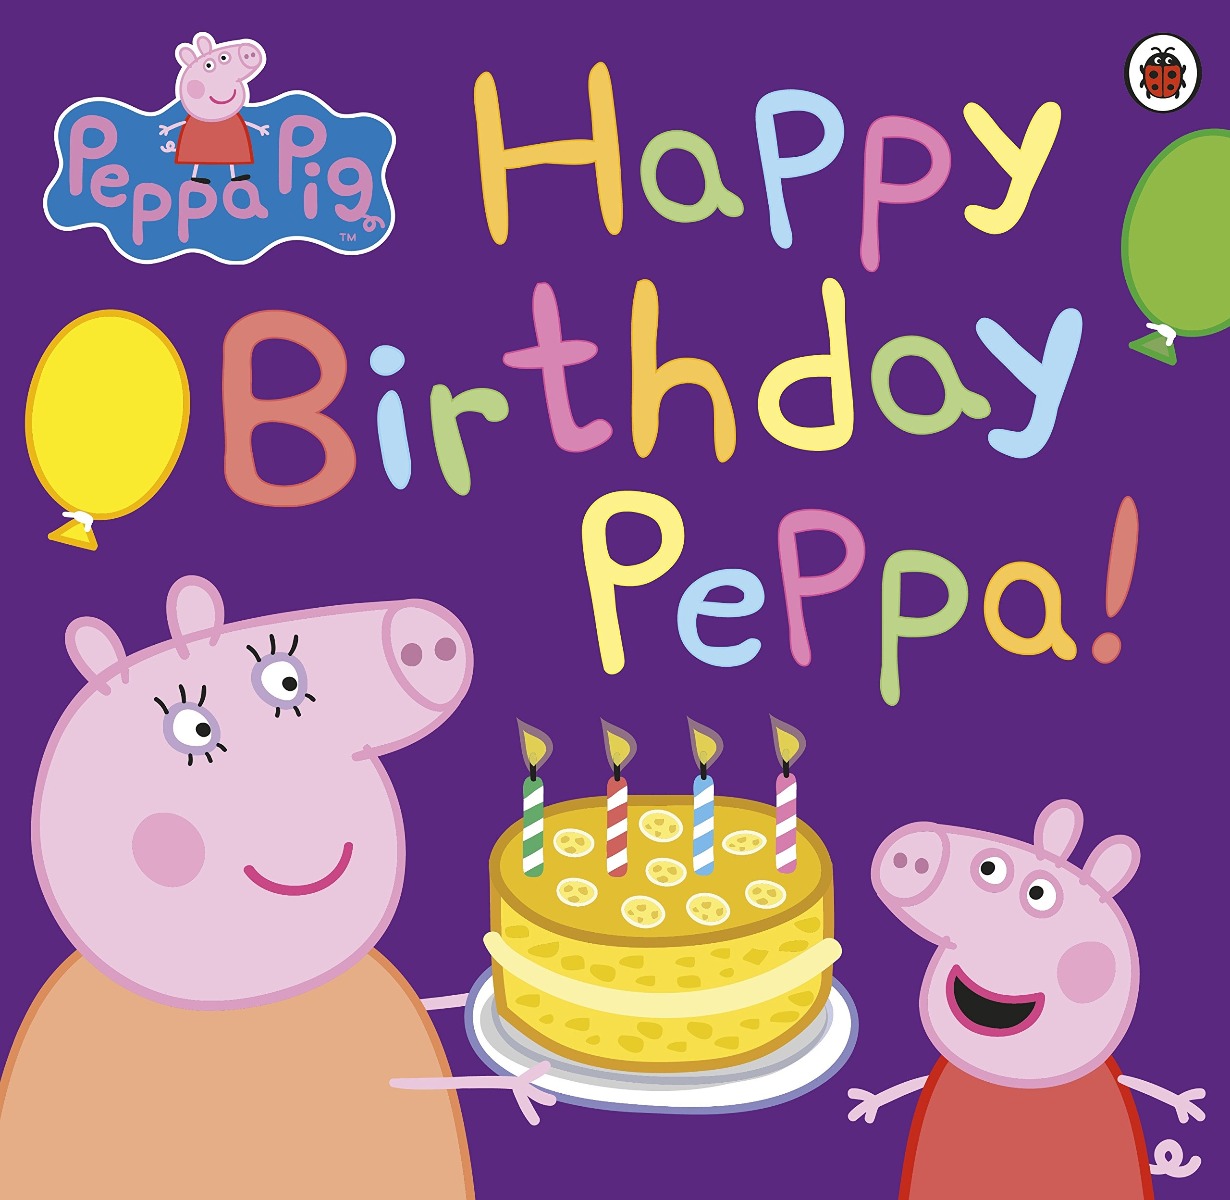 Peppa Pig Happy Birthday Peppa-0